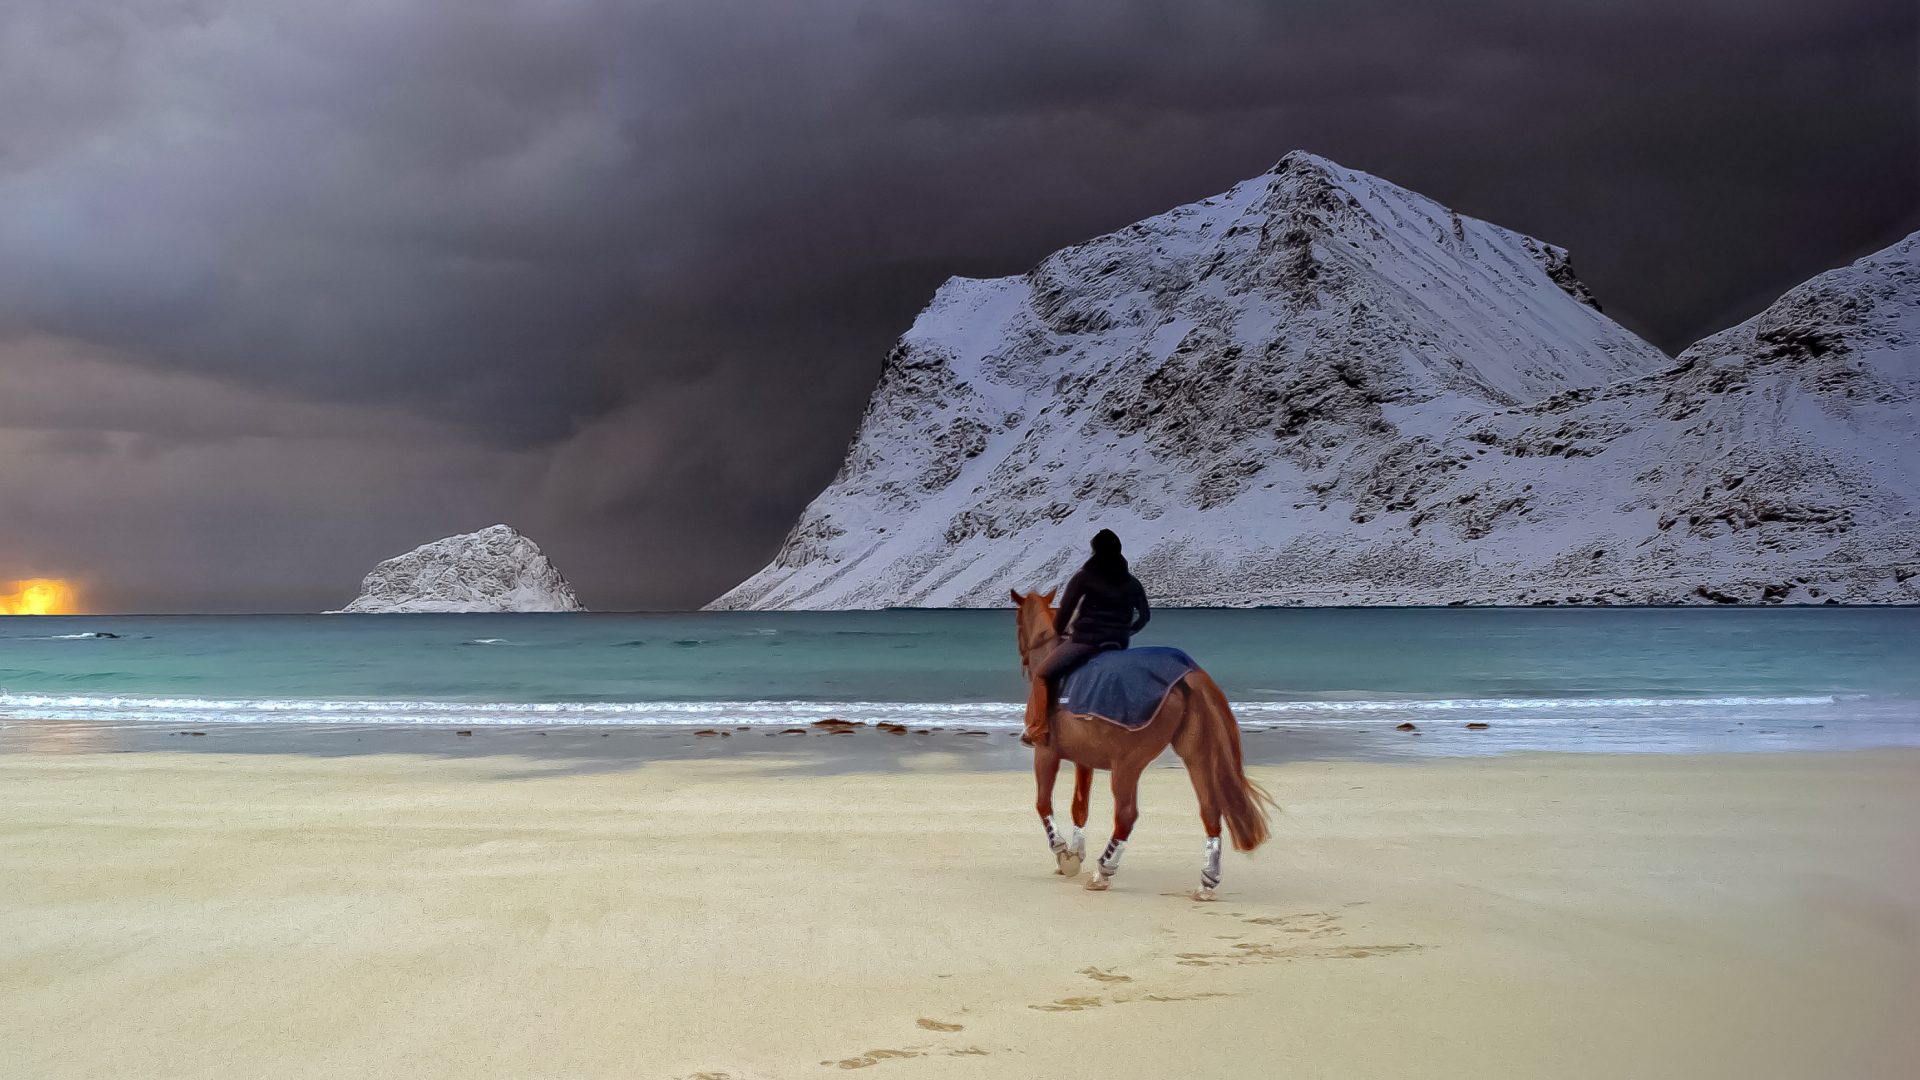 Horse Riding On Beach wallpaper 1920x1080